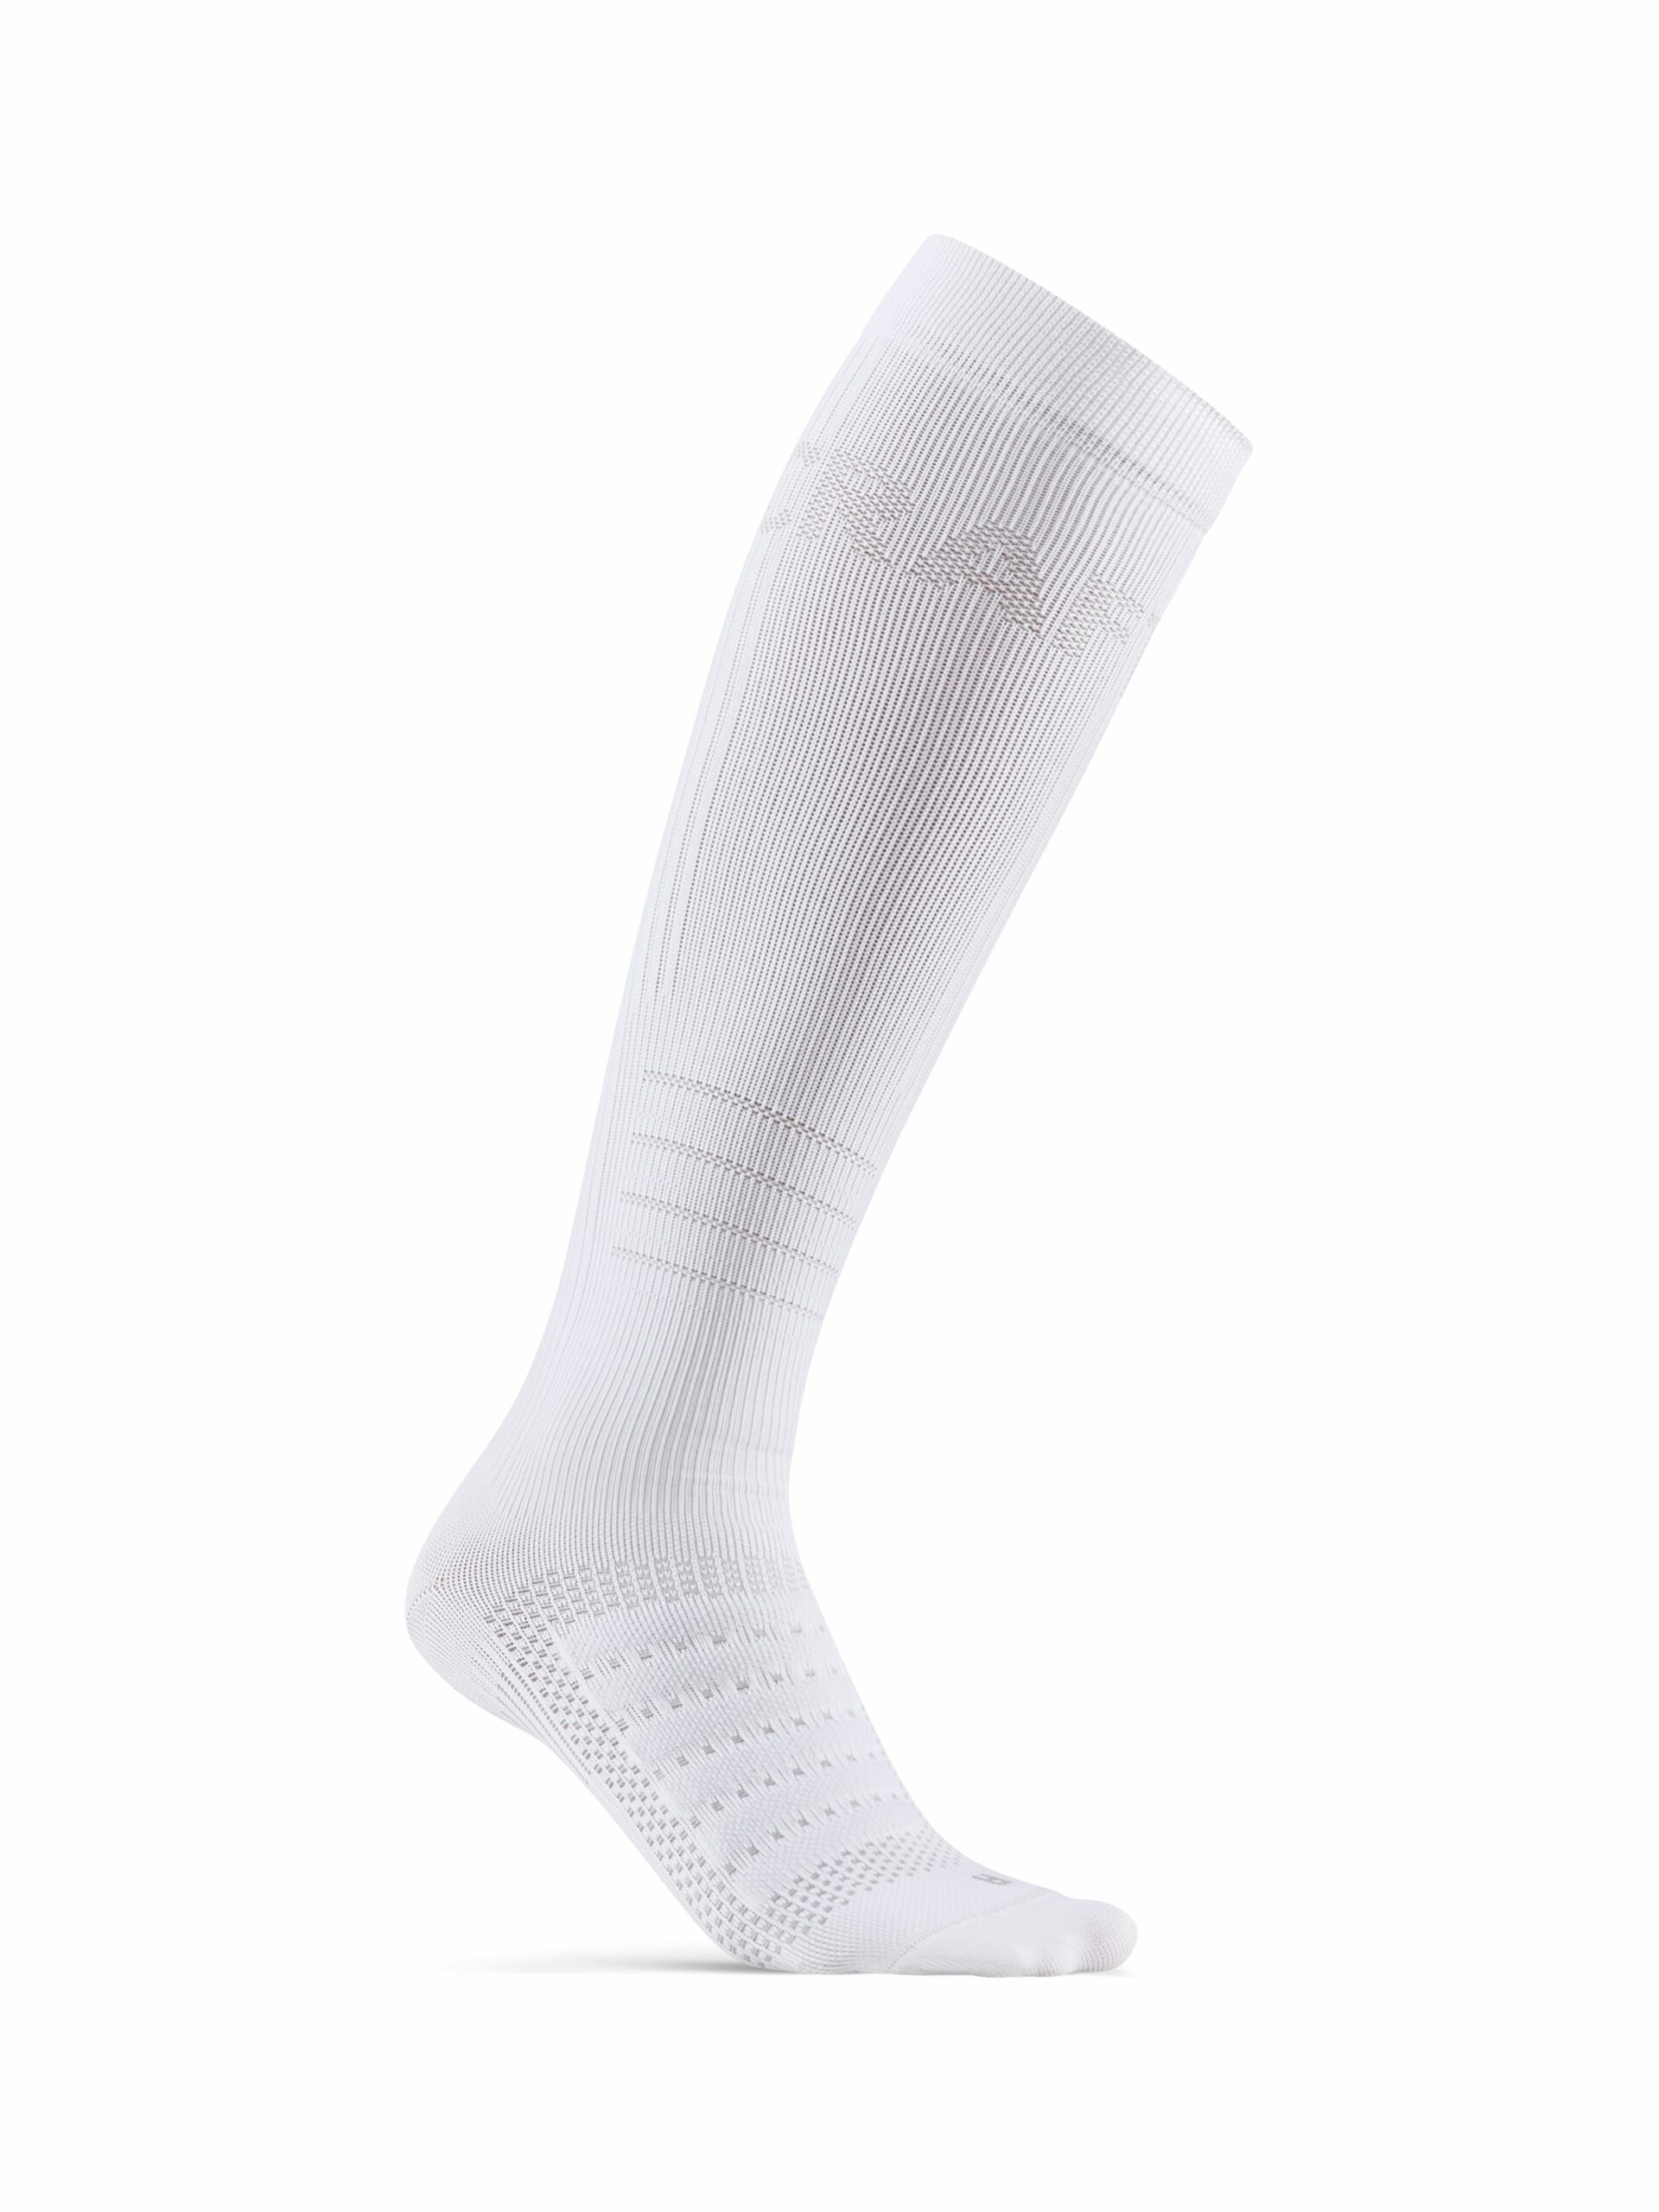 Craft - ADV Dry Compression Sock - White 43/45